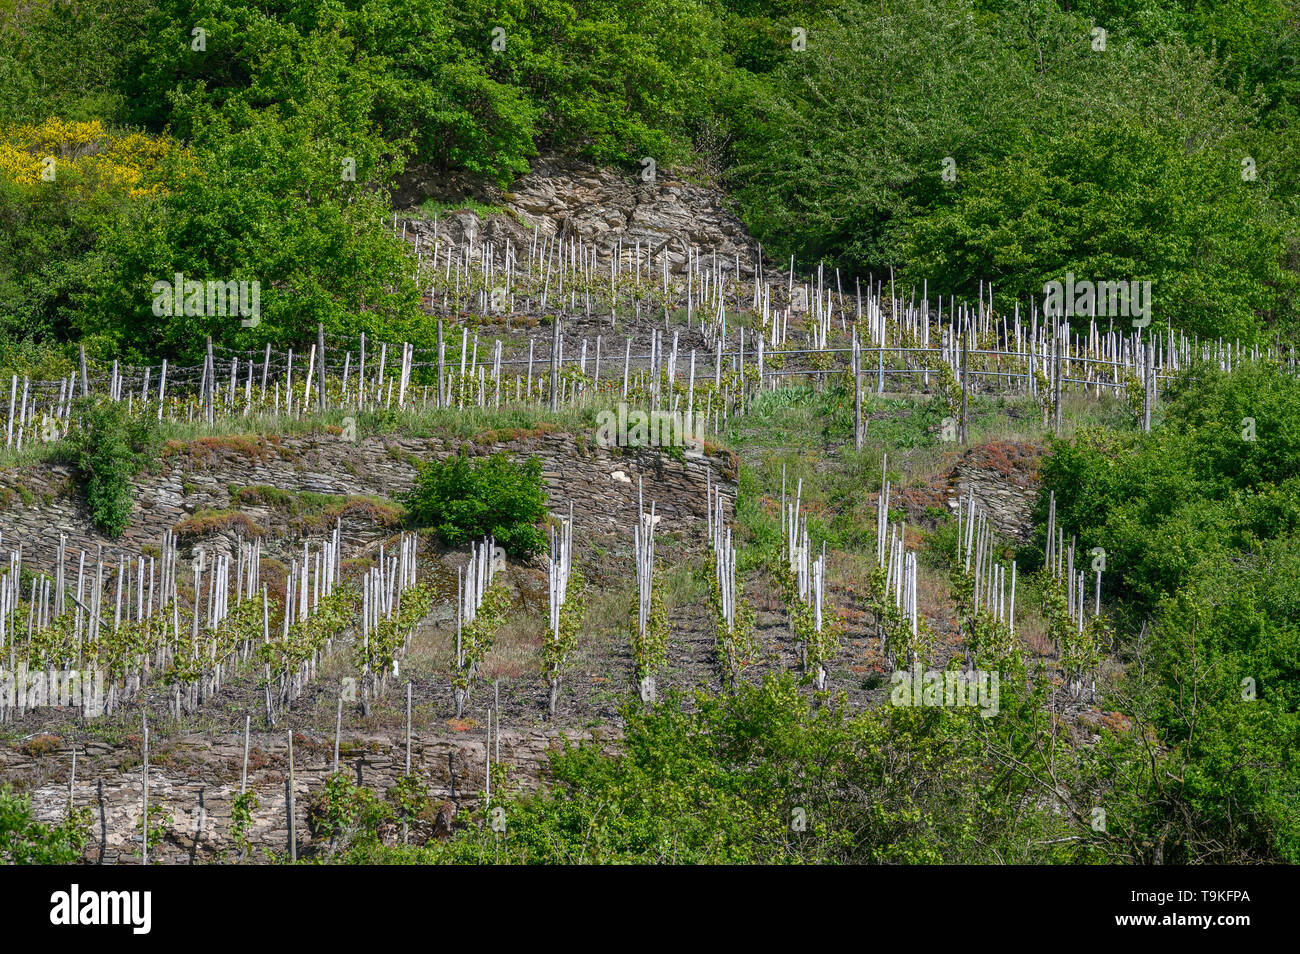 biodiversity in vineyard sites at Piesport (Piesporter Goldtröpfchen) Mosel Valley, Germany Stock Photo